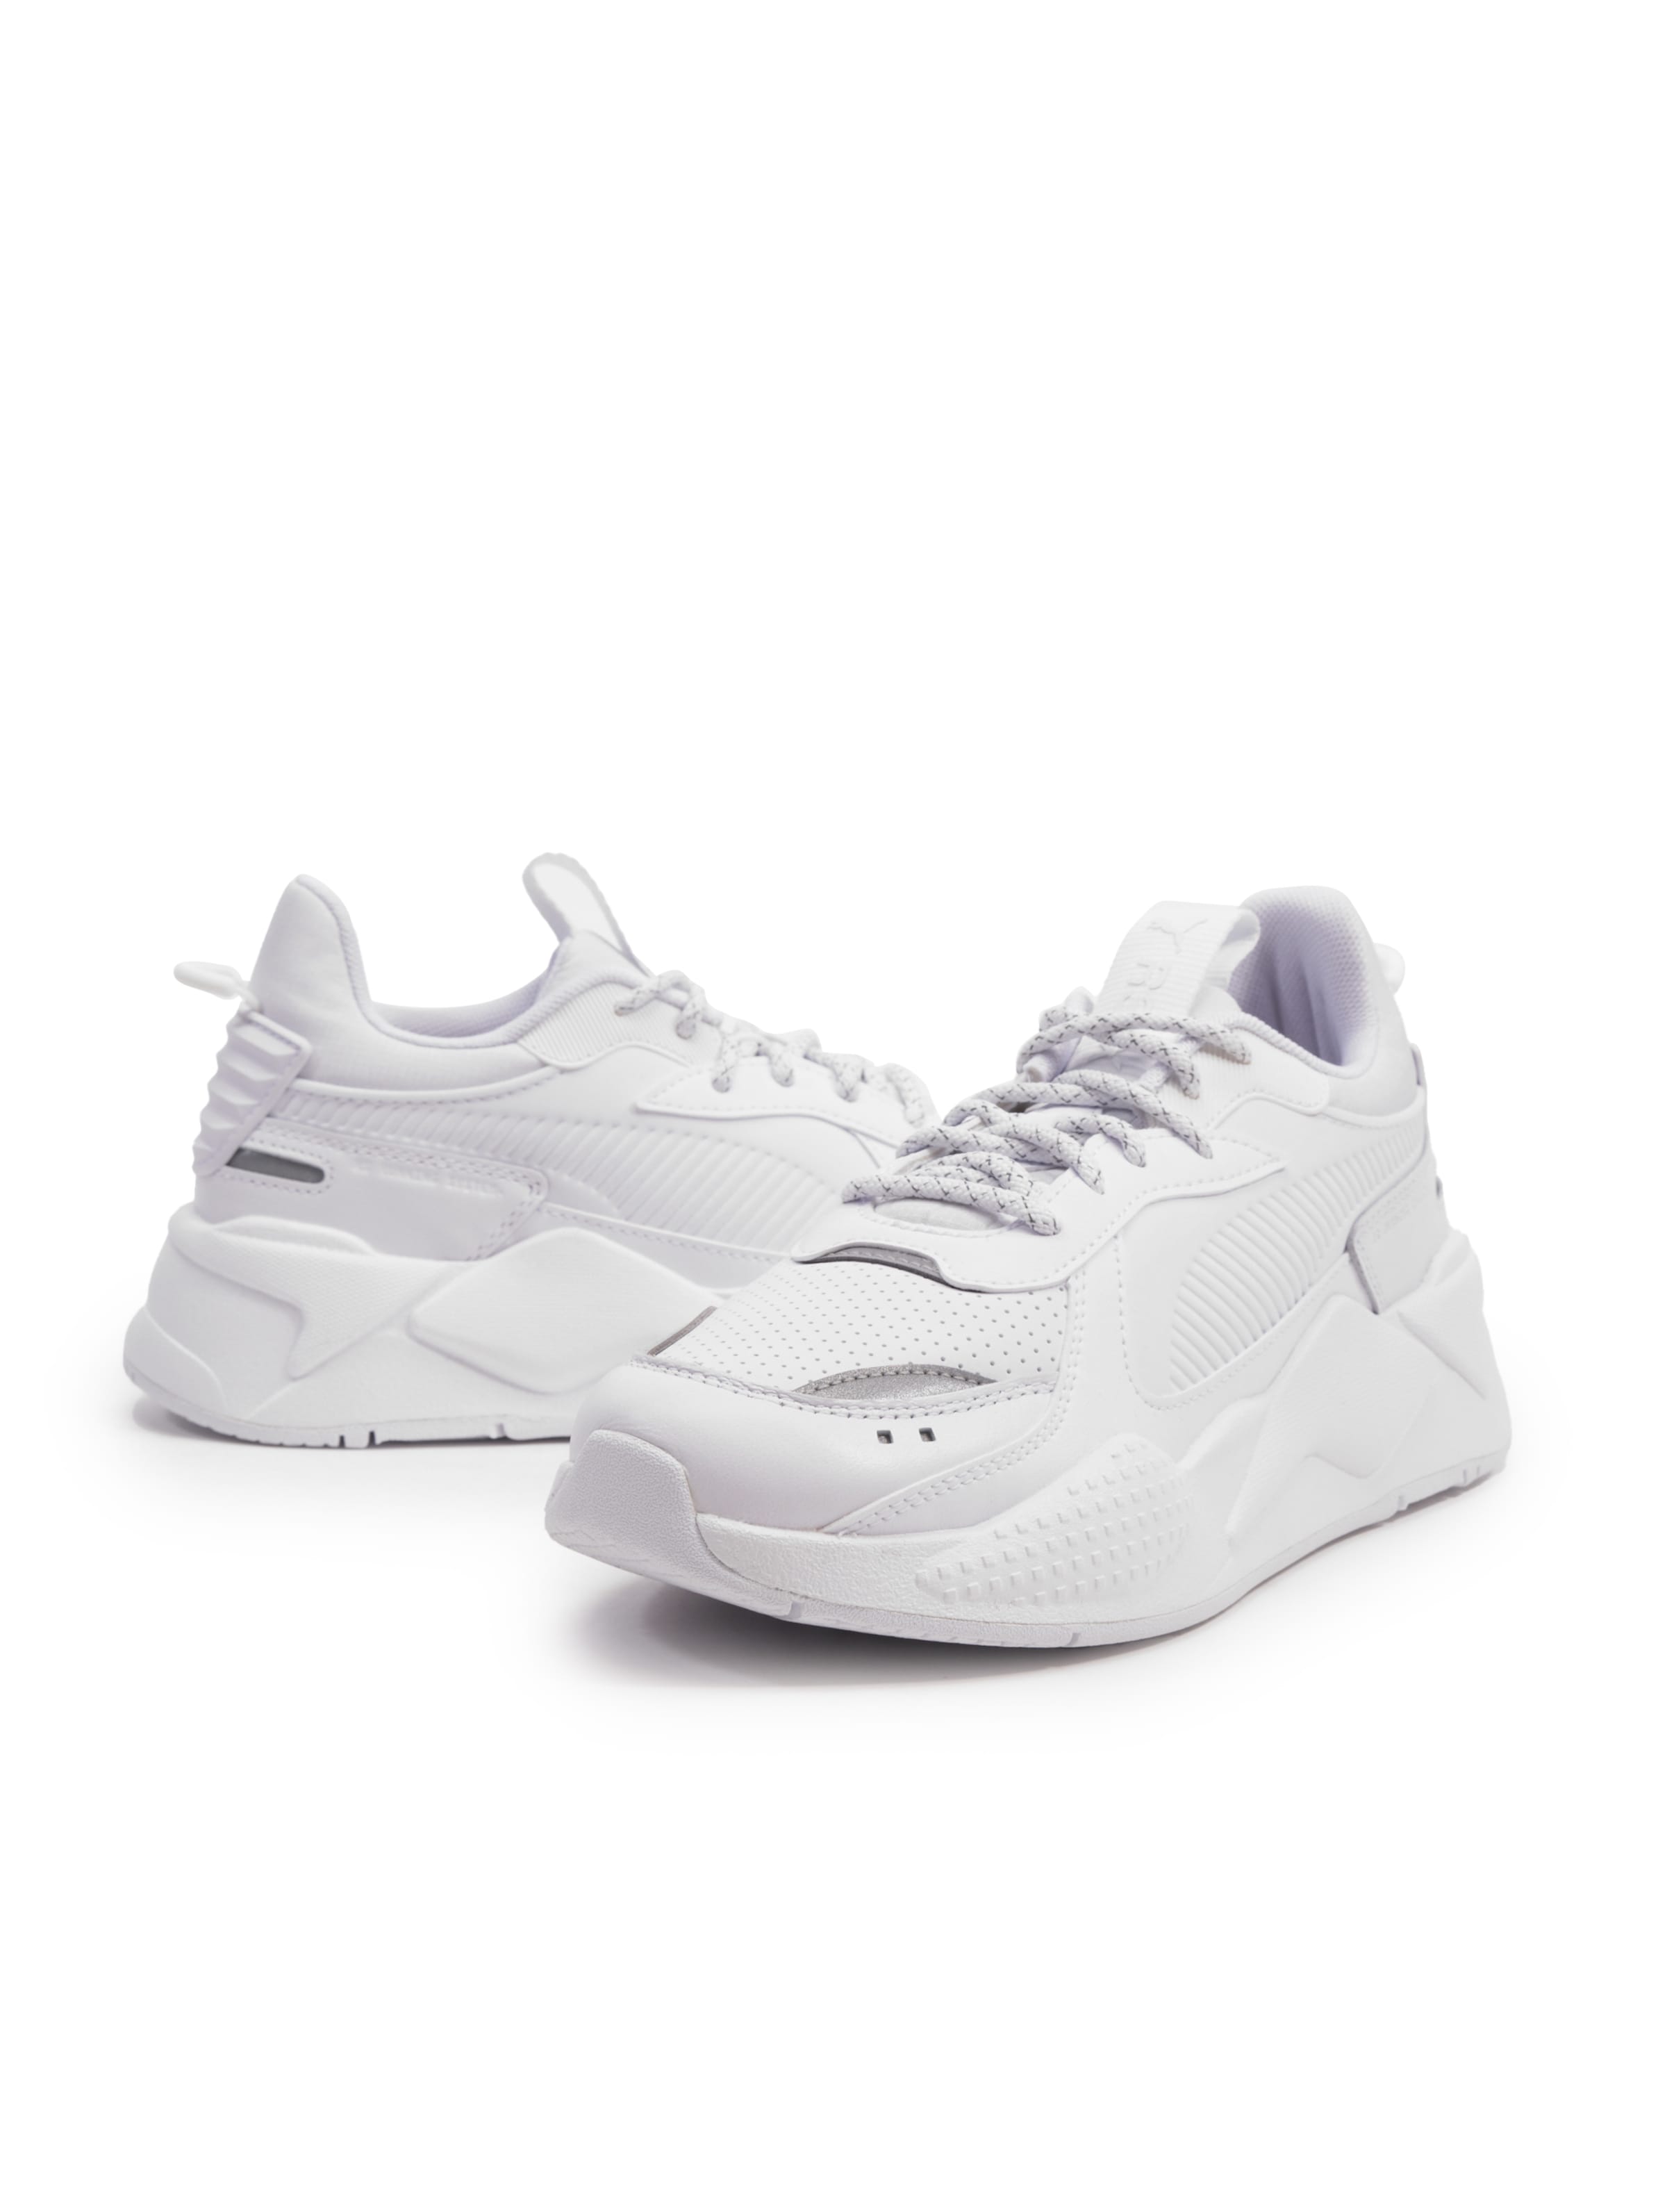 Puma Rs-X Triple Schuhe Mannen op kleur wit, Maat 44.5